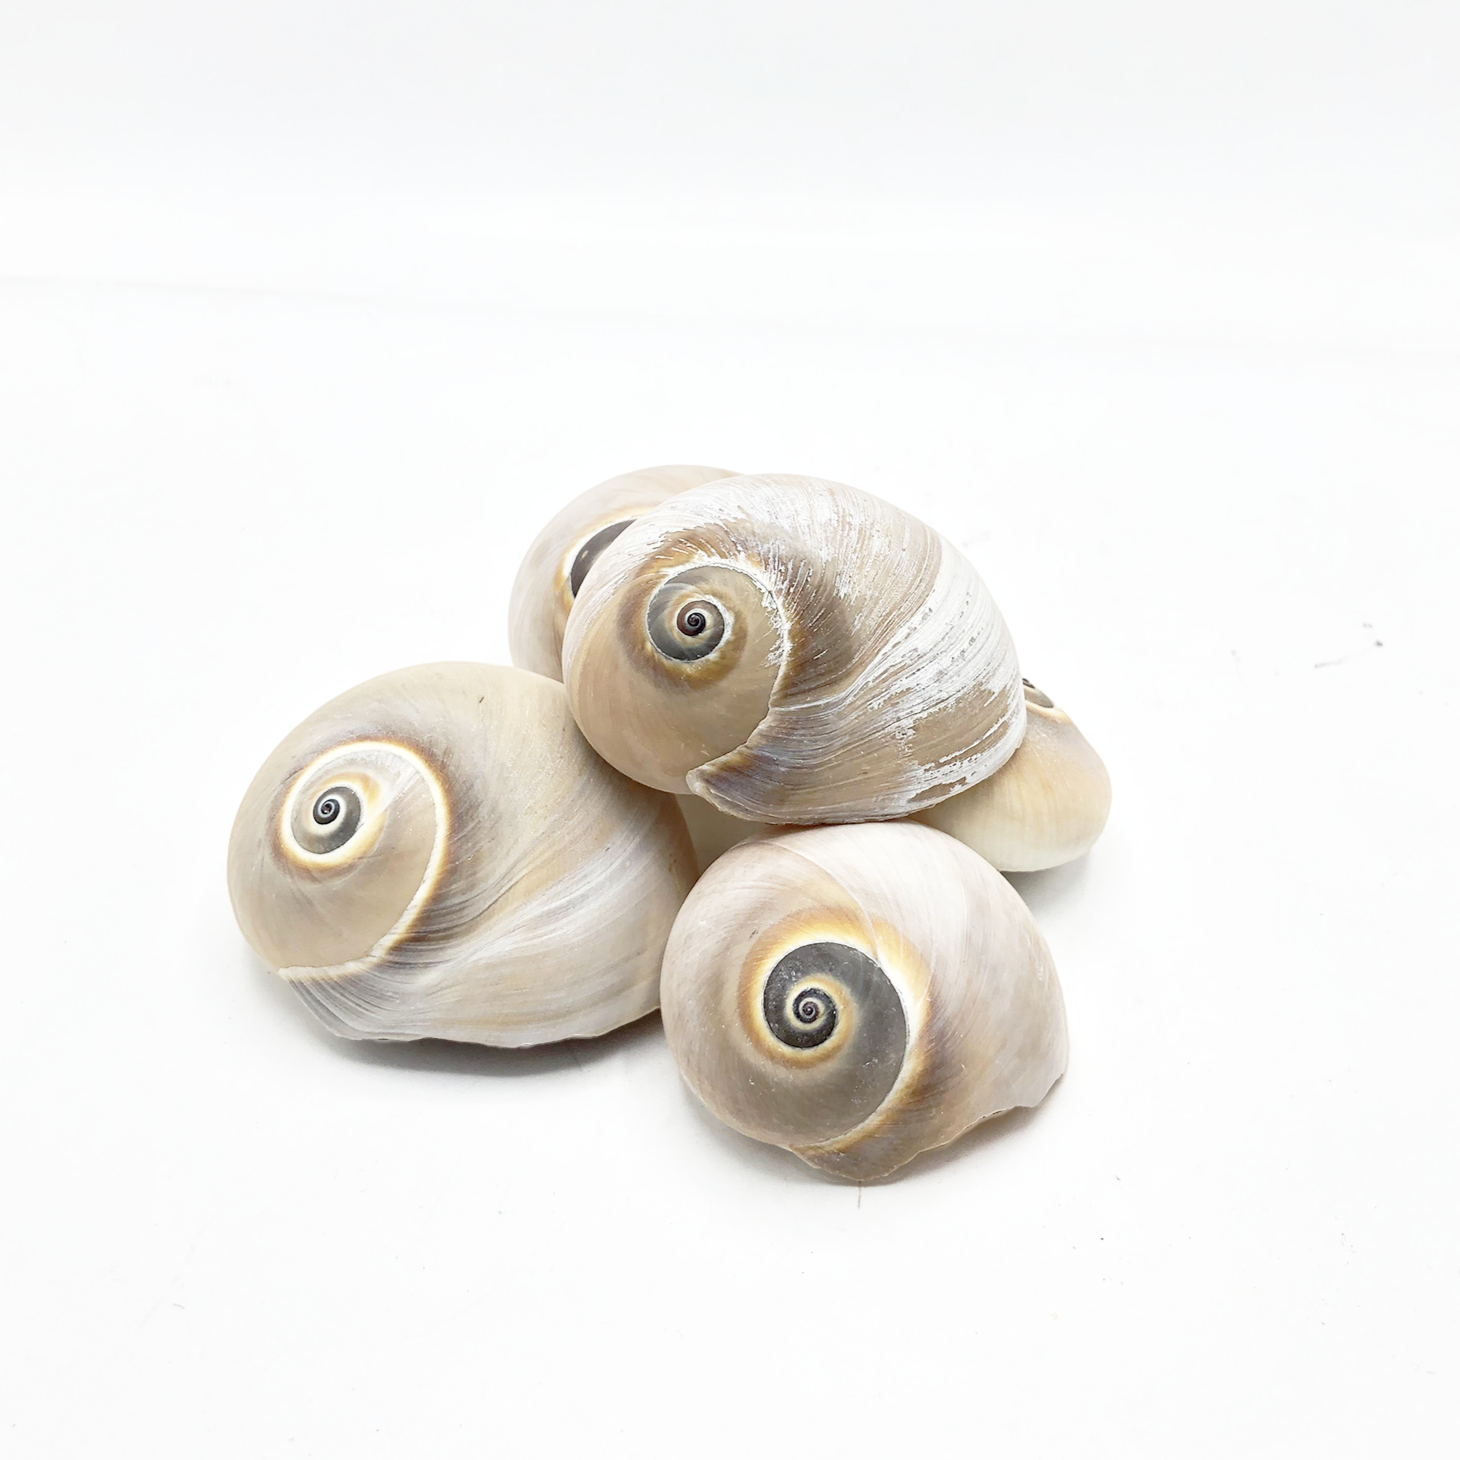 Decor Sea Shells - Spiral